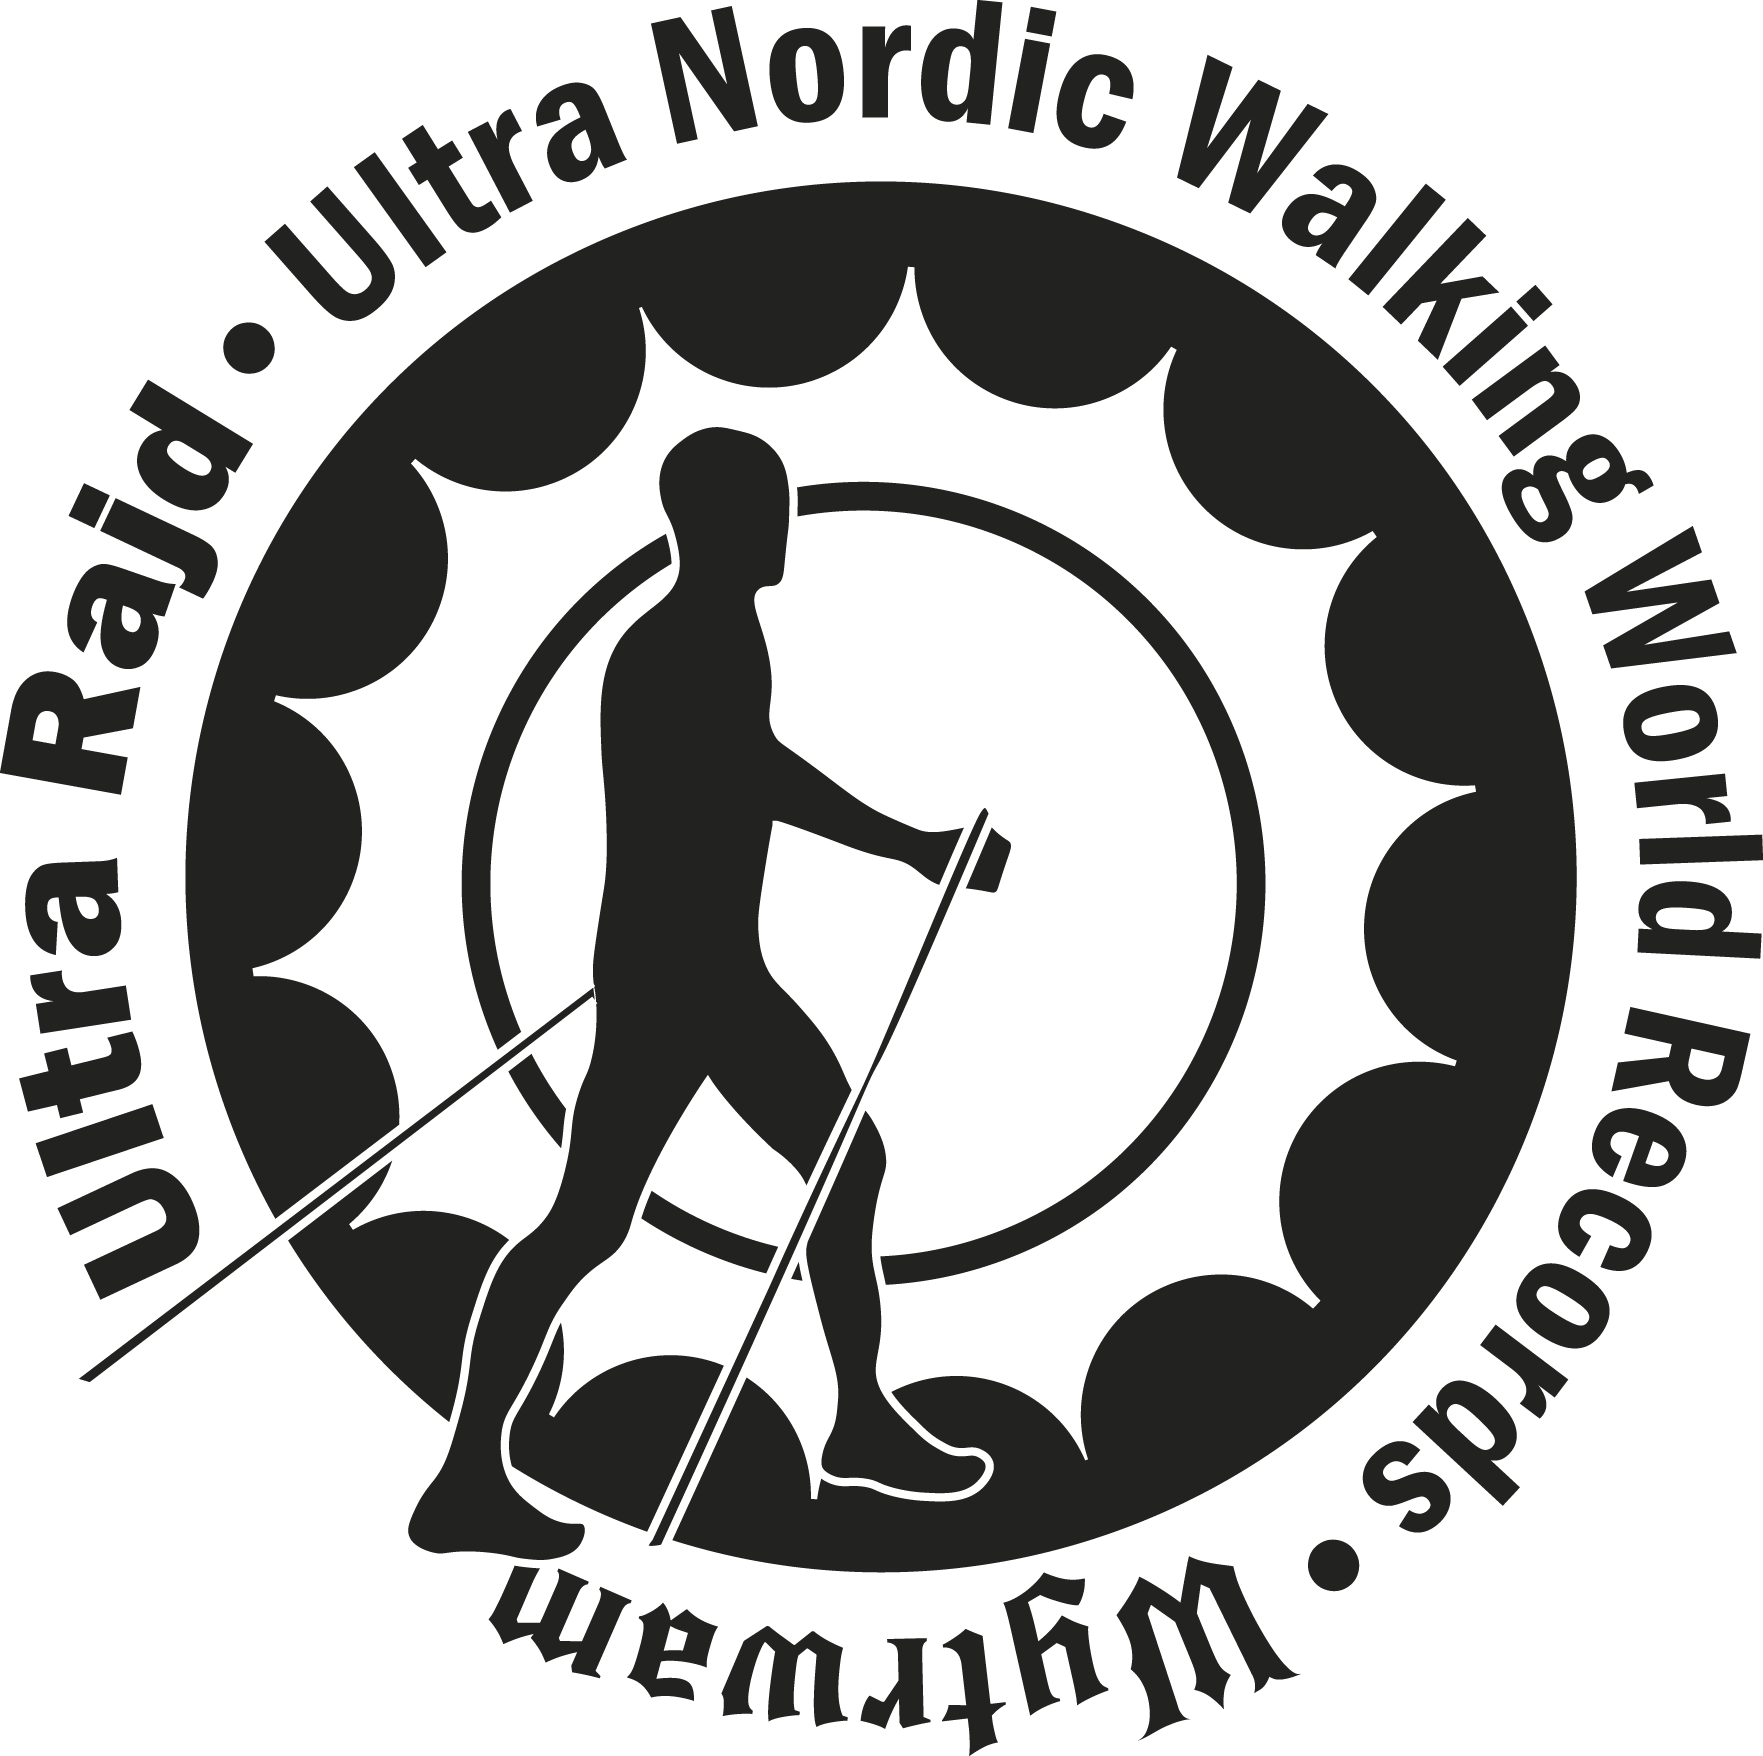 Ultra Rajd Nordic Walking World Records